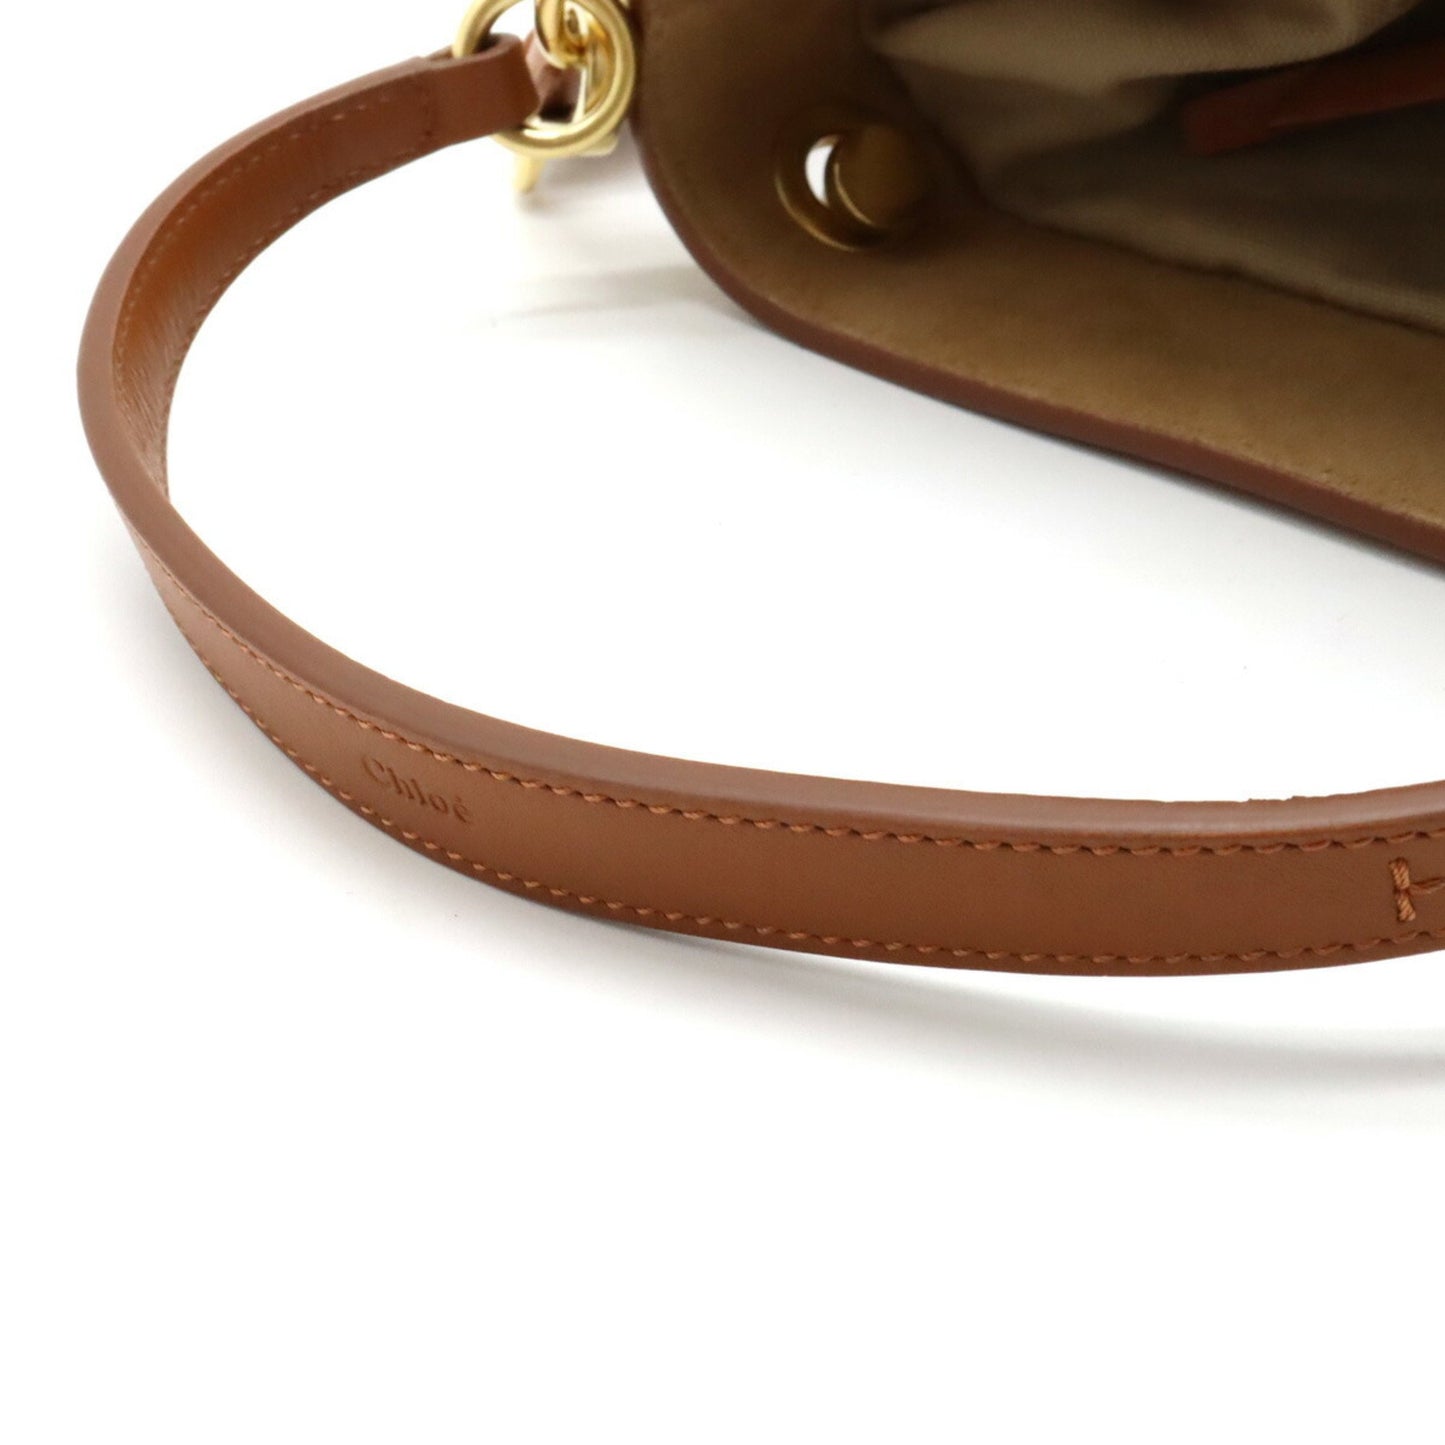 Chloe Women's Camel Leather Mini Handbag with Shoulder Strap in Camel